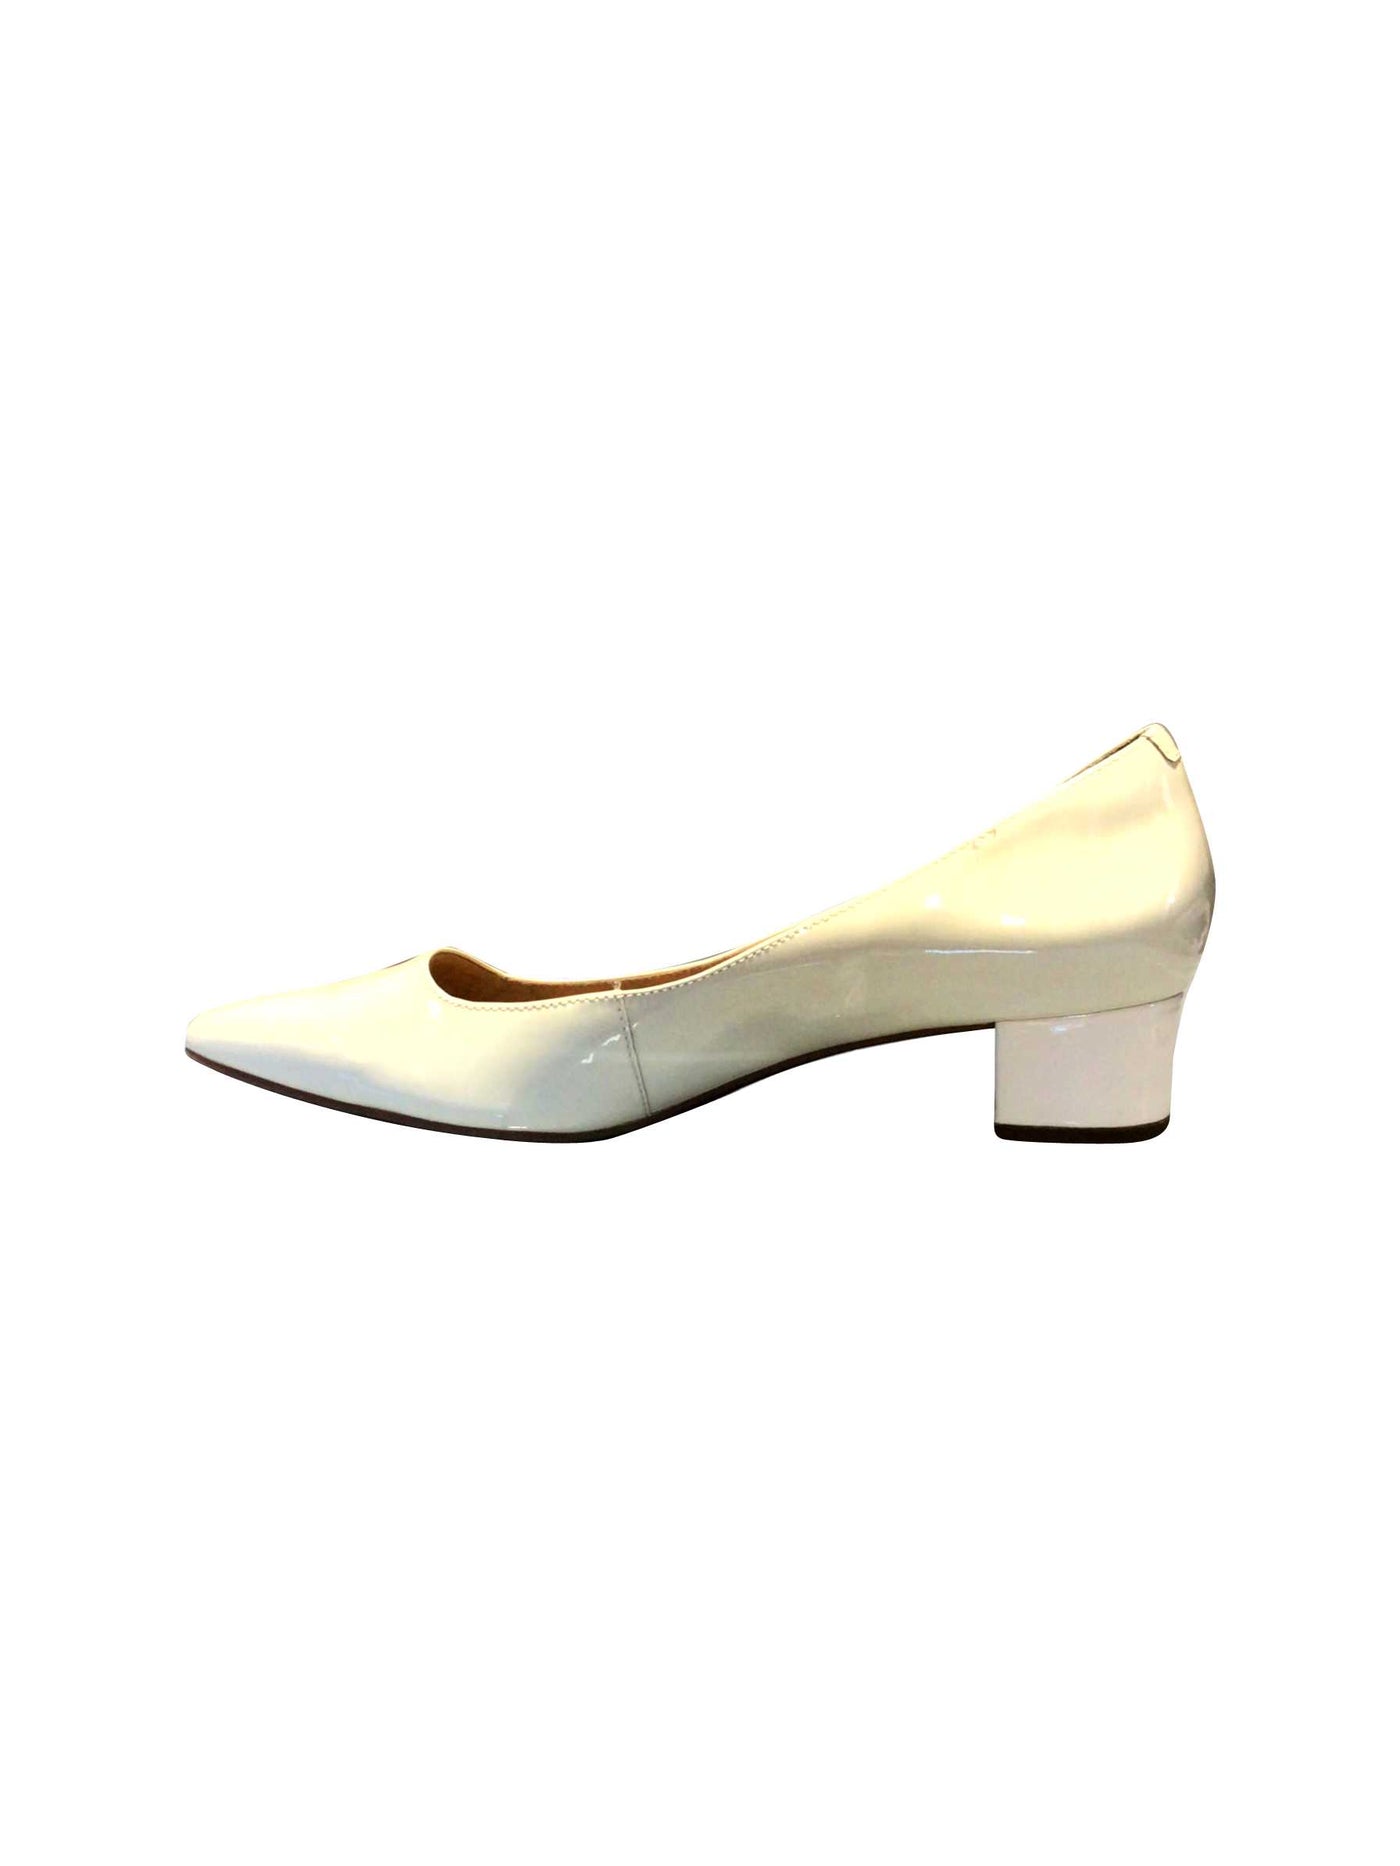 ROCKPORT Regular fit Heels in White - Size 7.5 | 39.4 $ KOOP